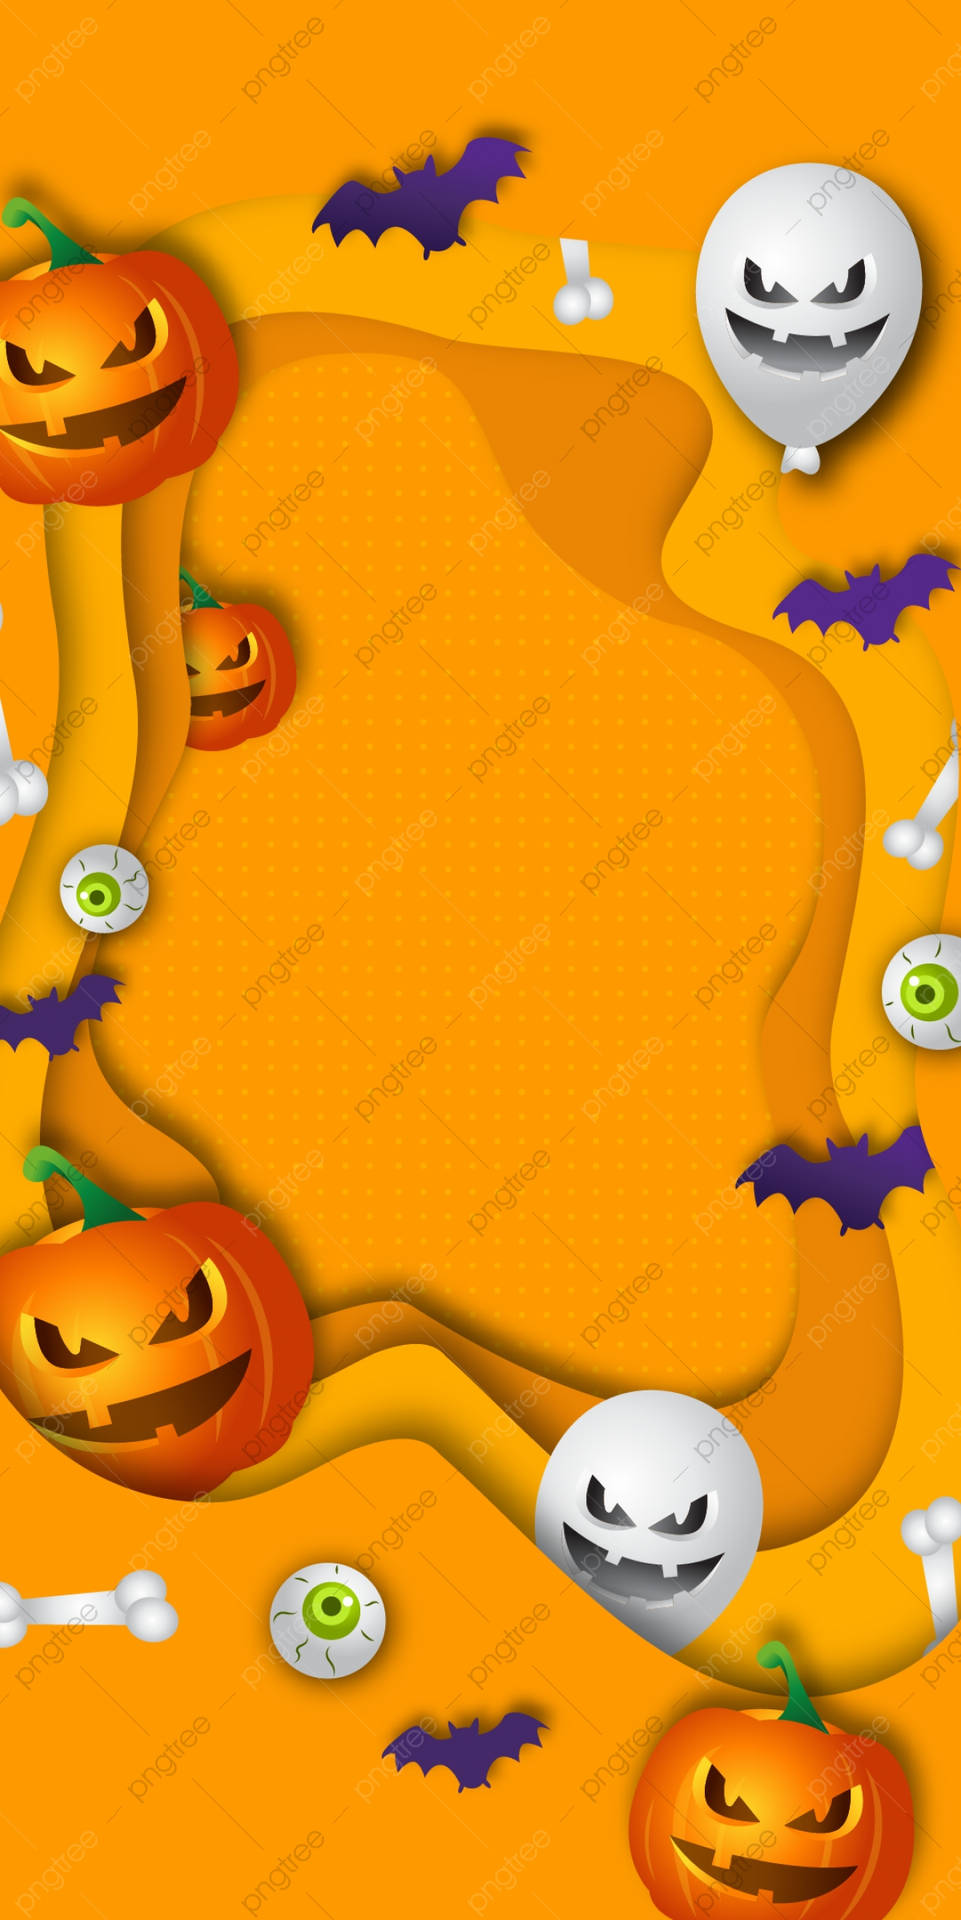 Pumpkin And Ghost Aesthetic Halloween Phone Wallpaper